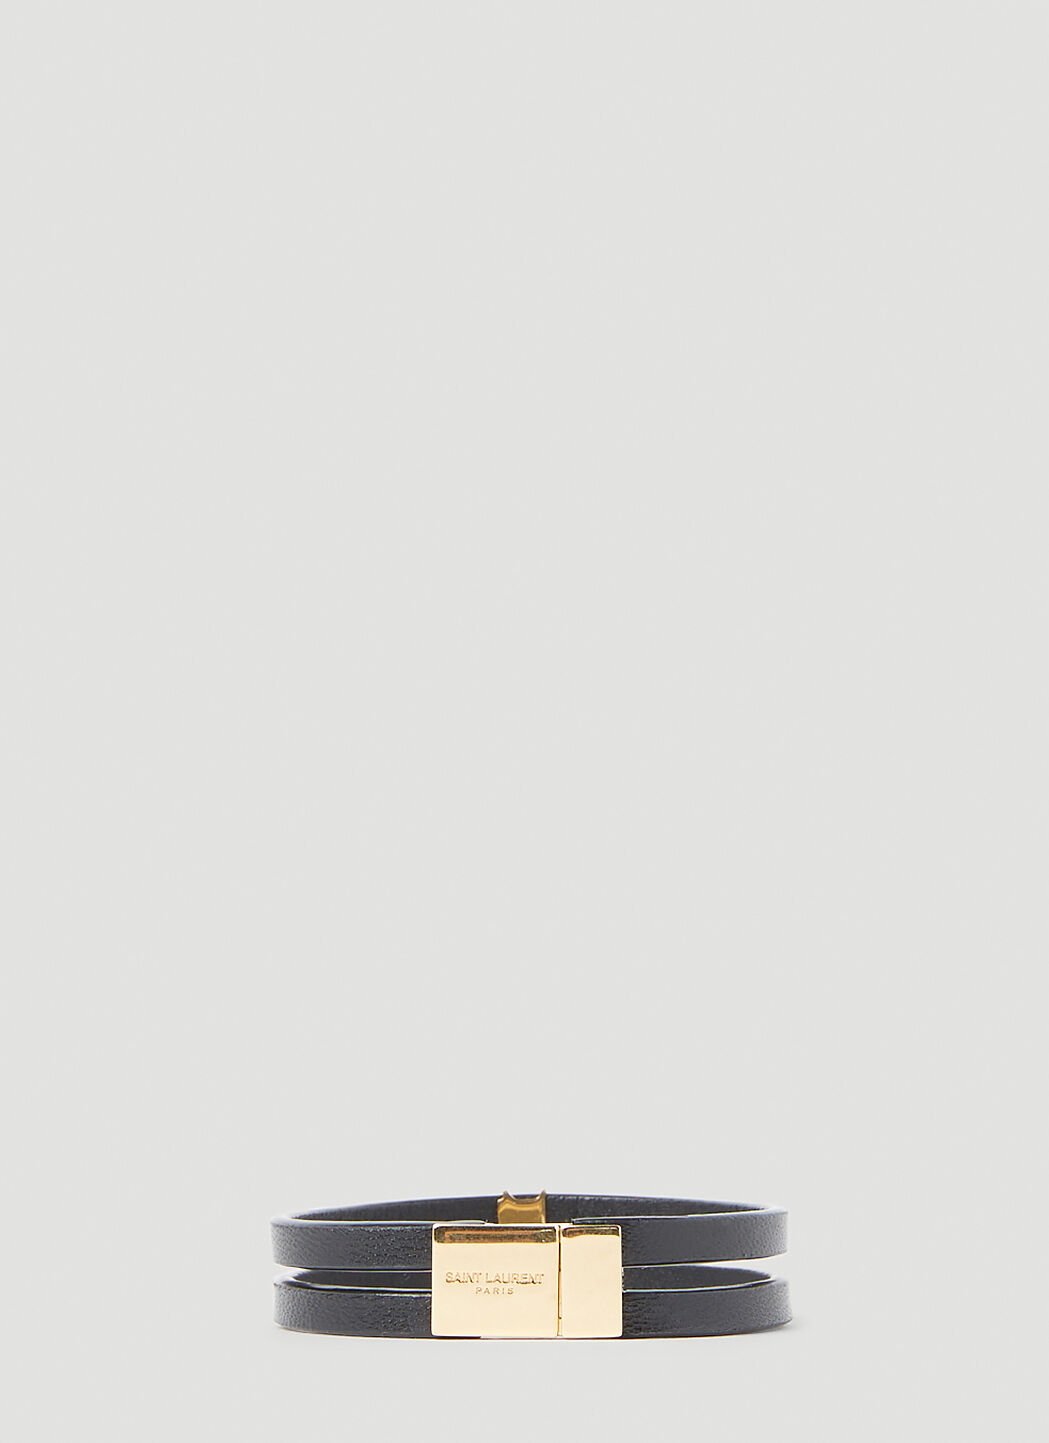 Vivienne Westwood Double-Strap Monogram Bracelet Silver vww0256017